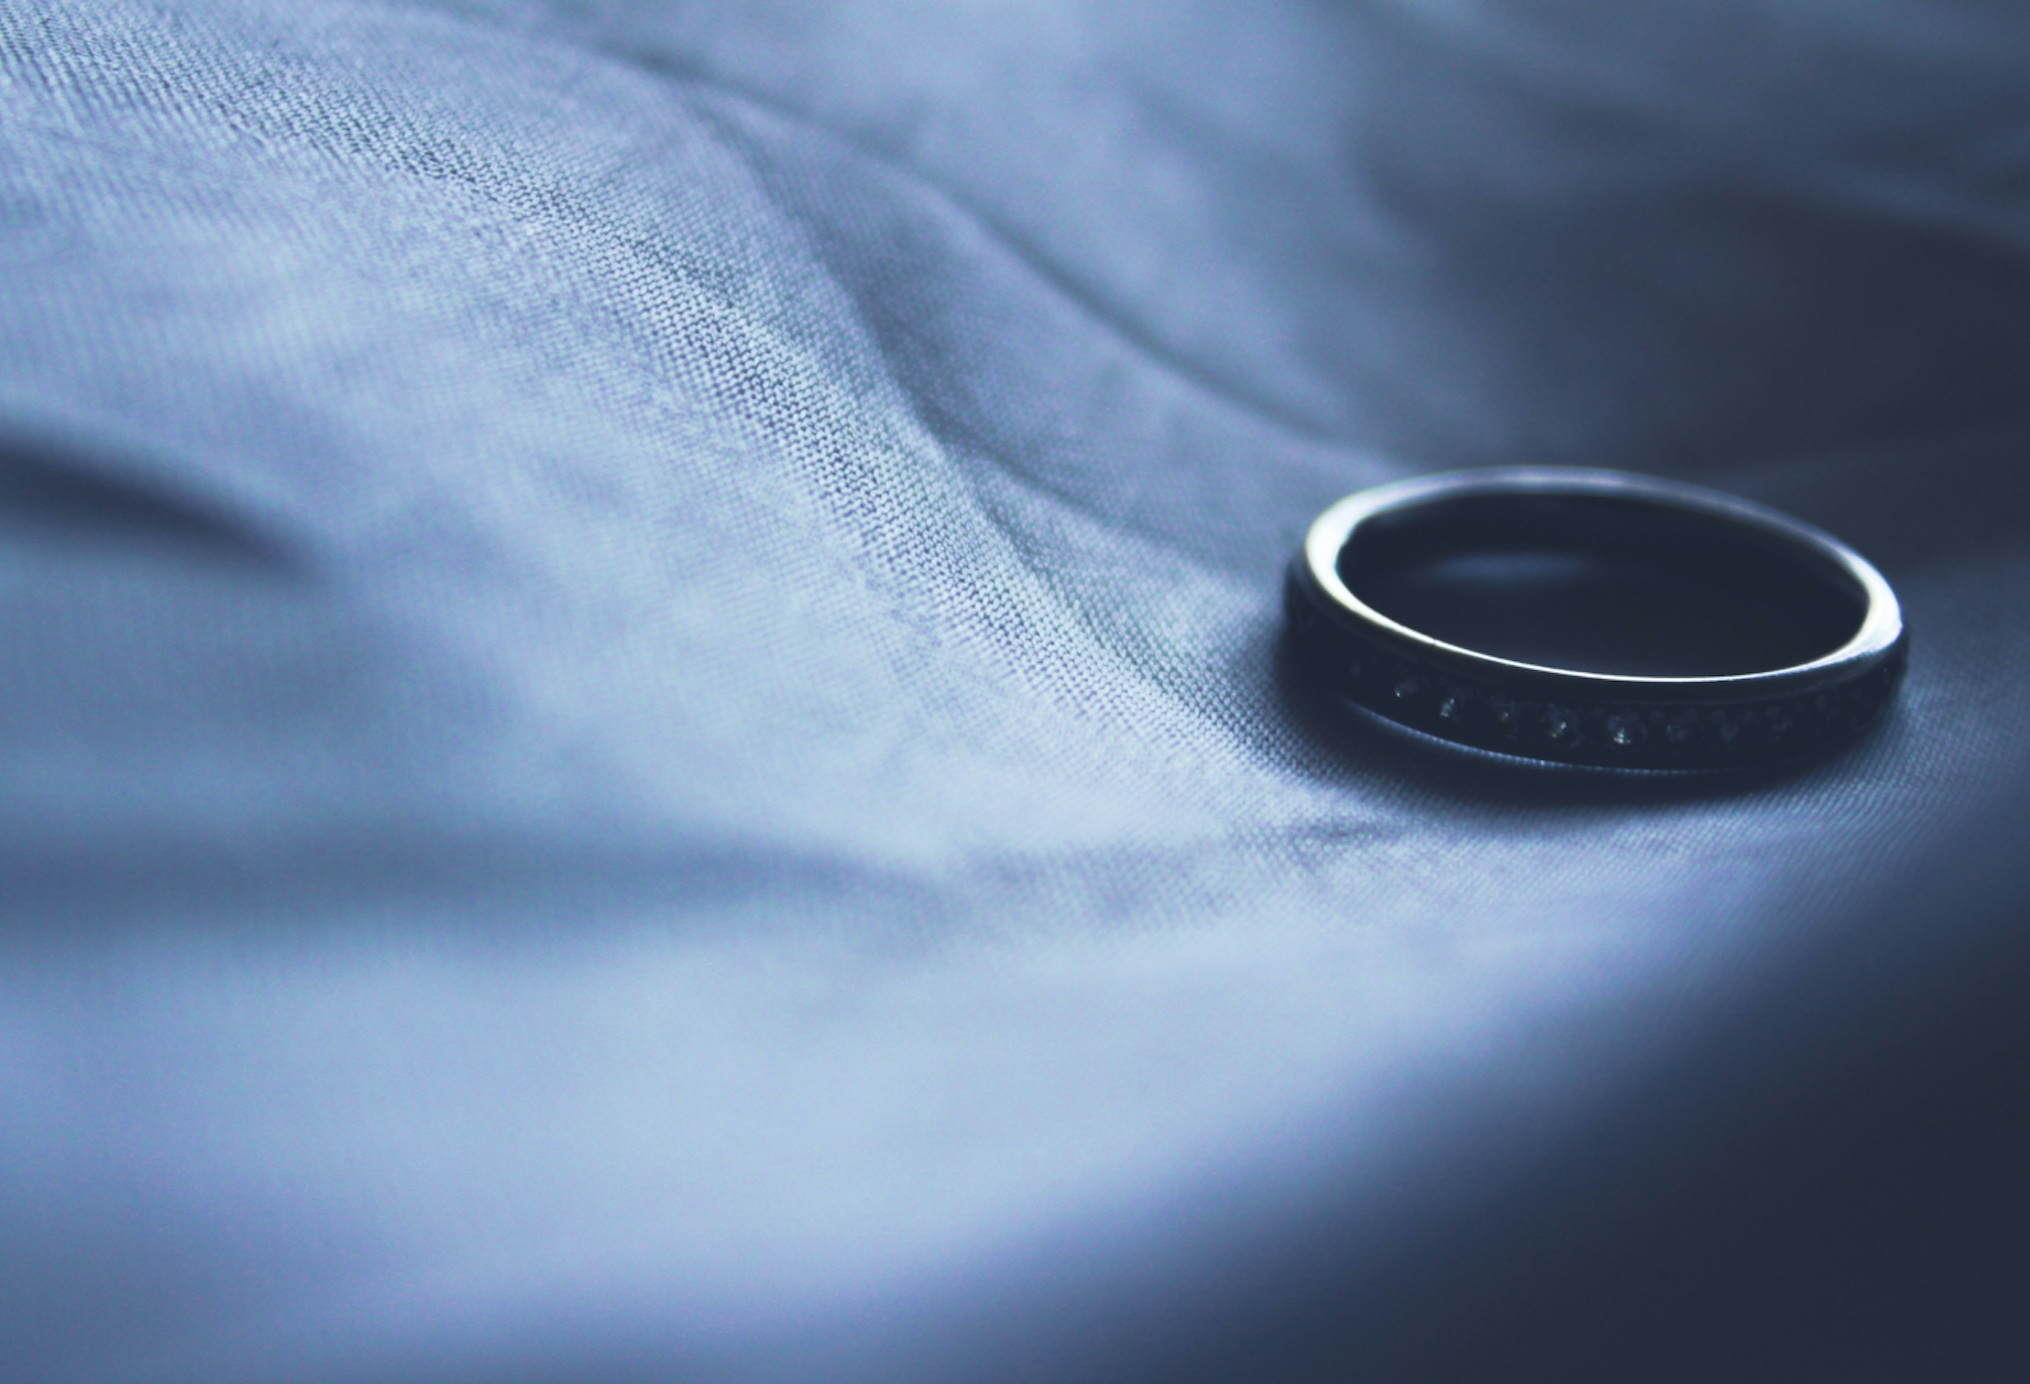 Wedding ring on blue cloth background; image by Siora Photography, via Unsplash.com.